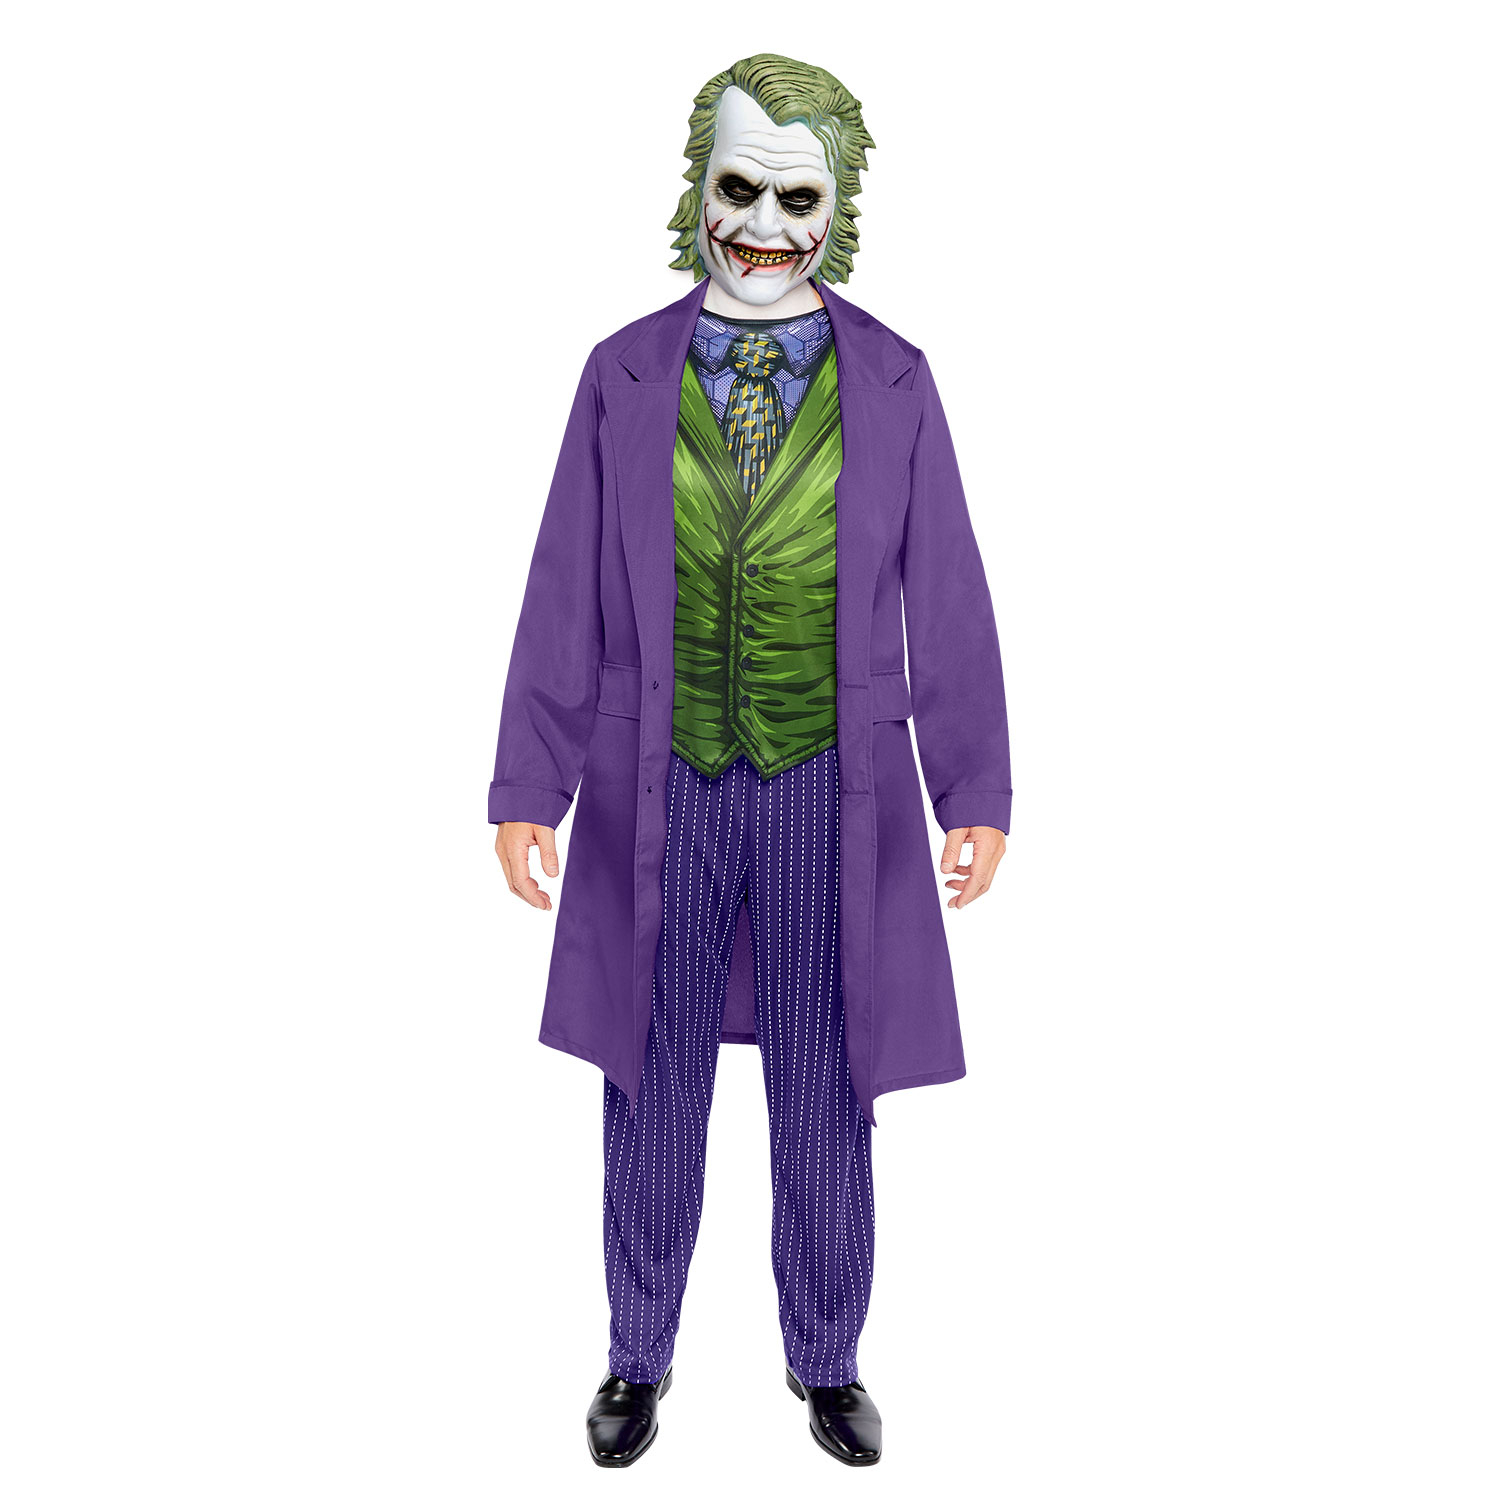 Joker Movie Costume - Size XL - 1 PC : Amscan International